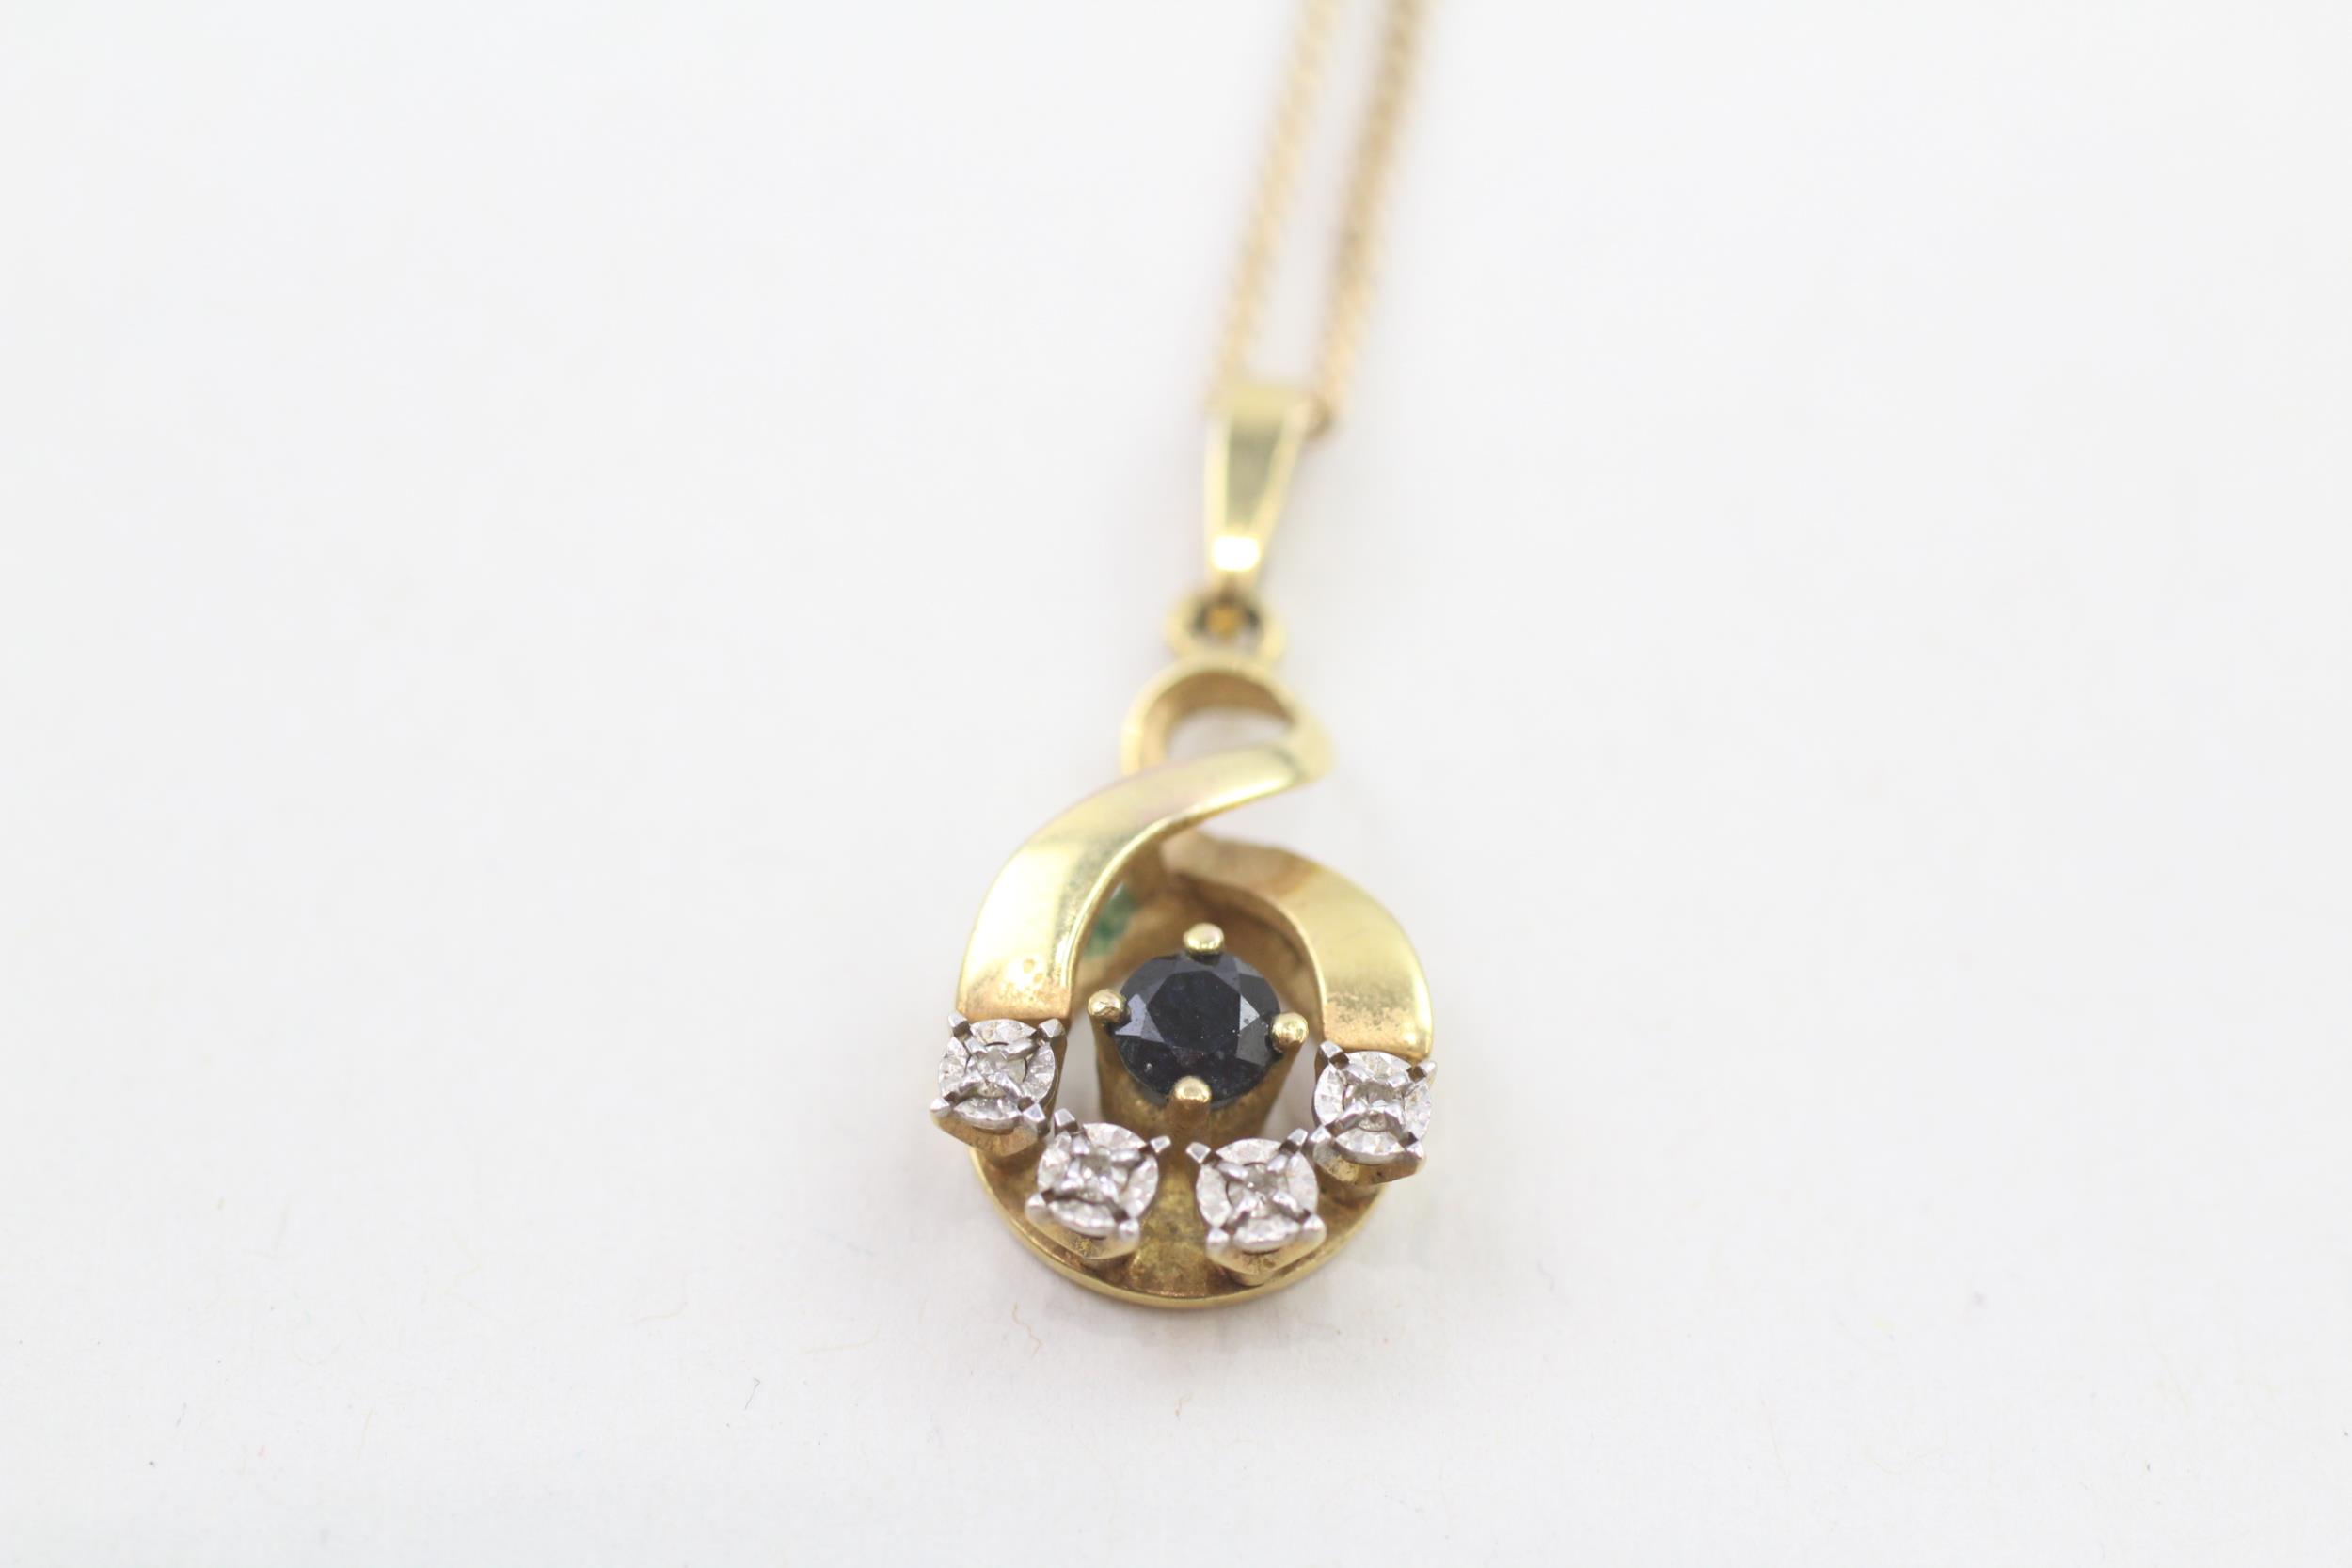 9ct gold sapphire & diamond pendant necklace (3.1g) - Image 2 of 5